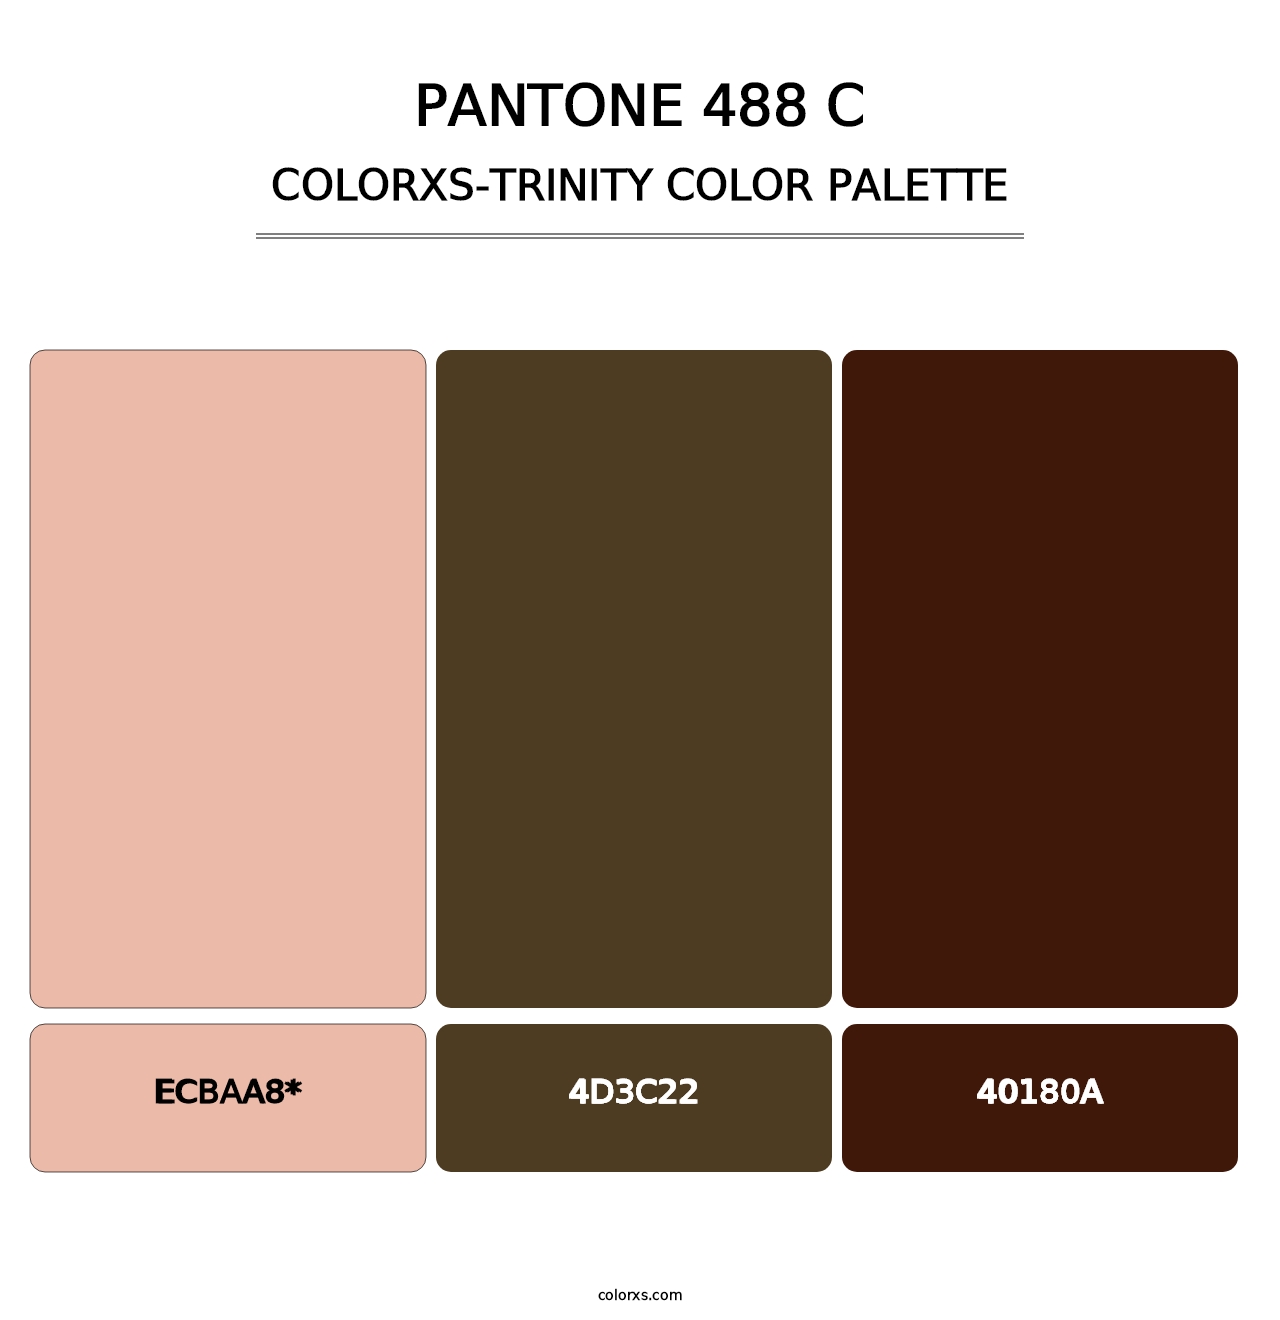 PANTONE 488 C - Colorxs Trinity Palette